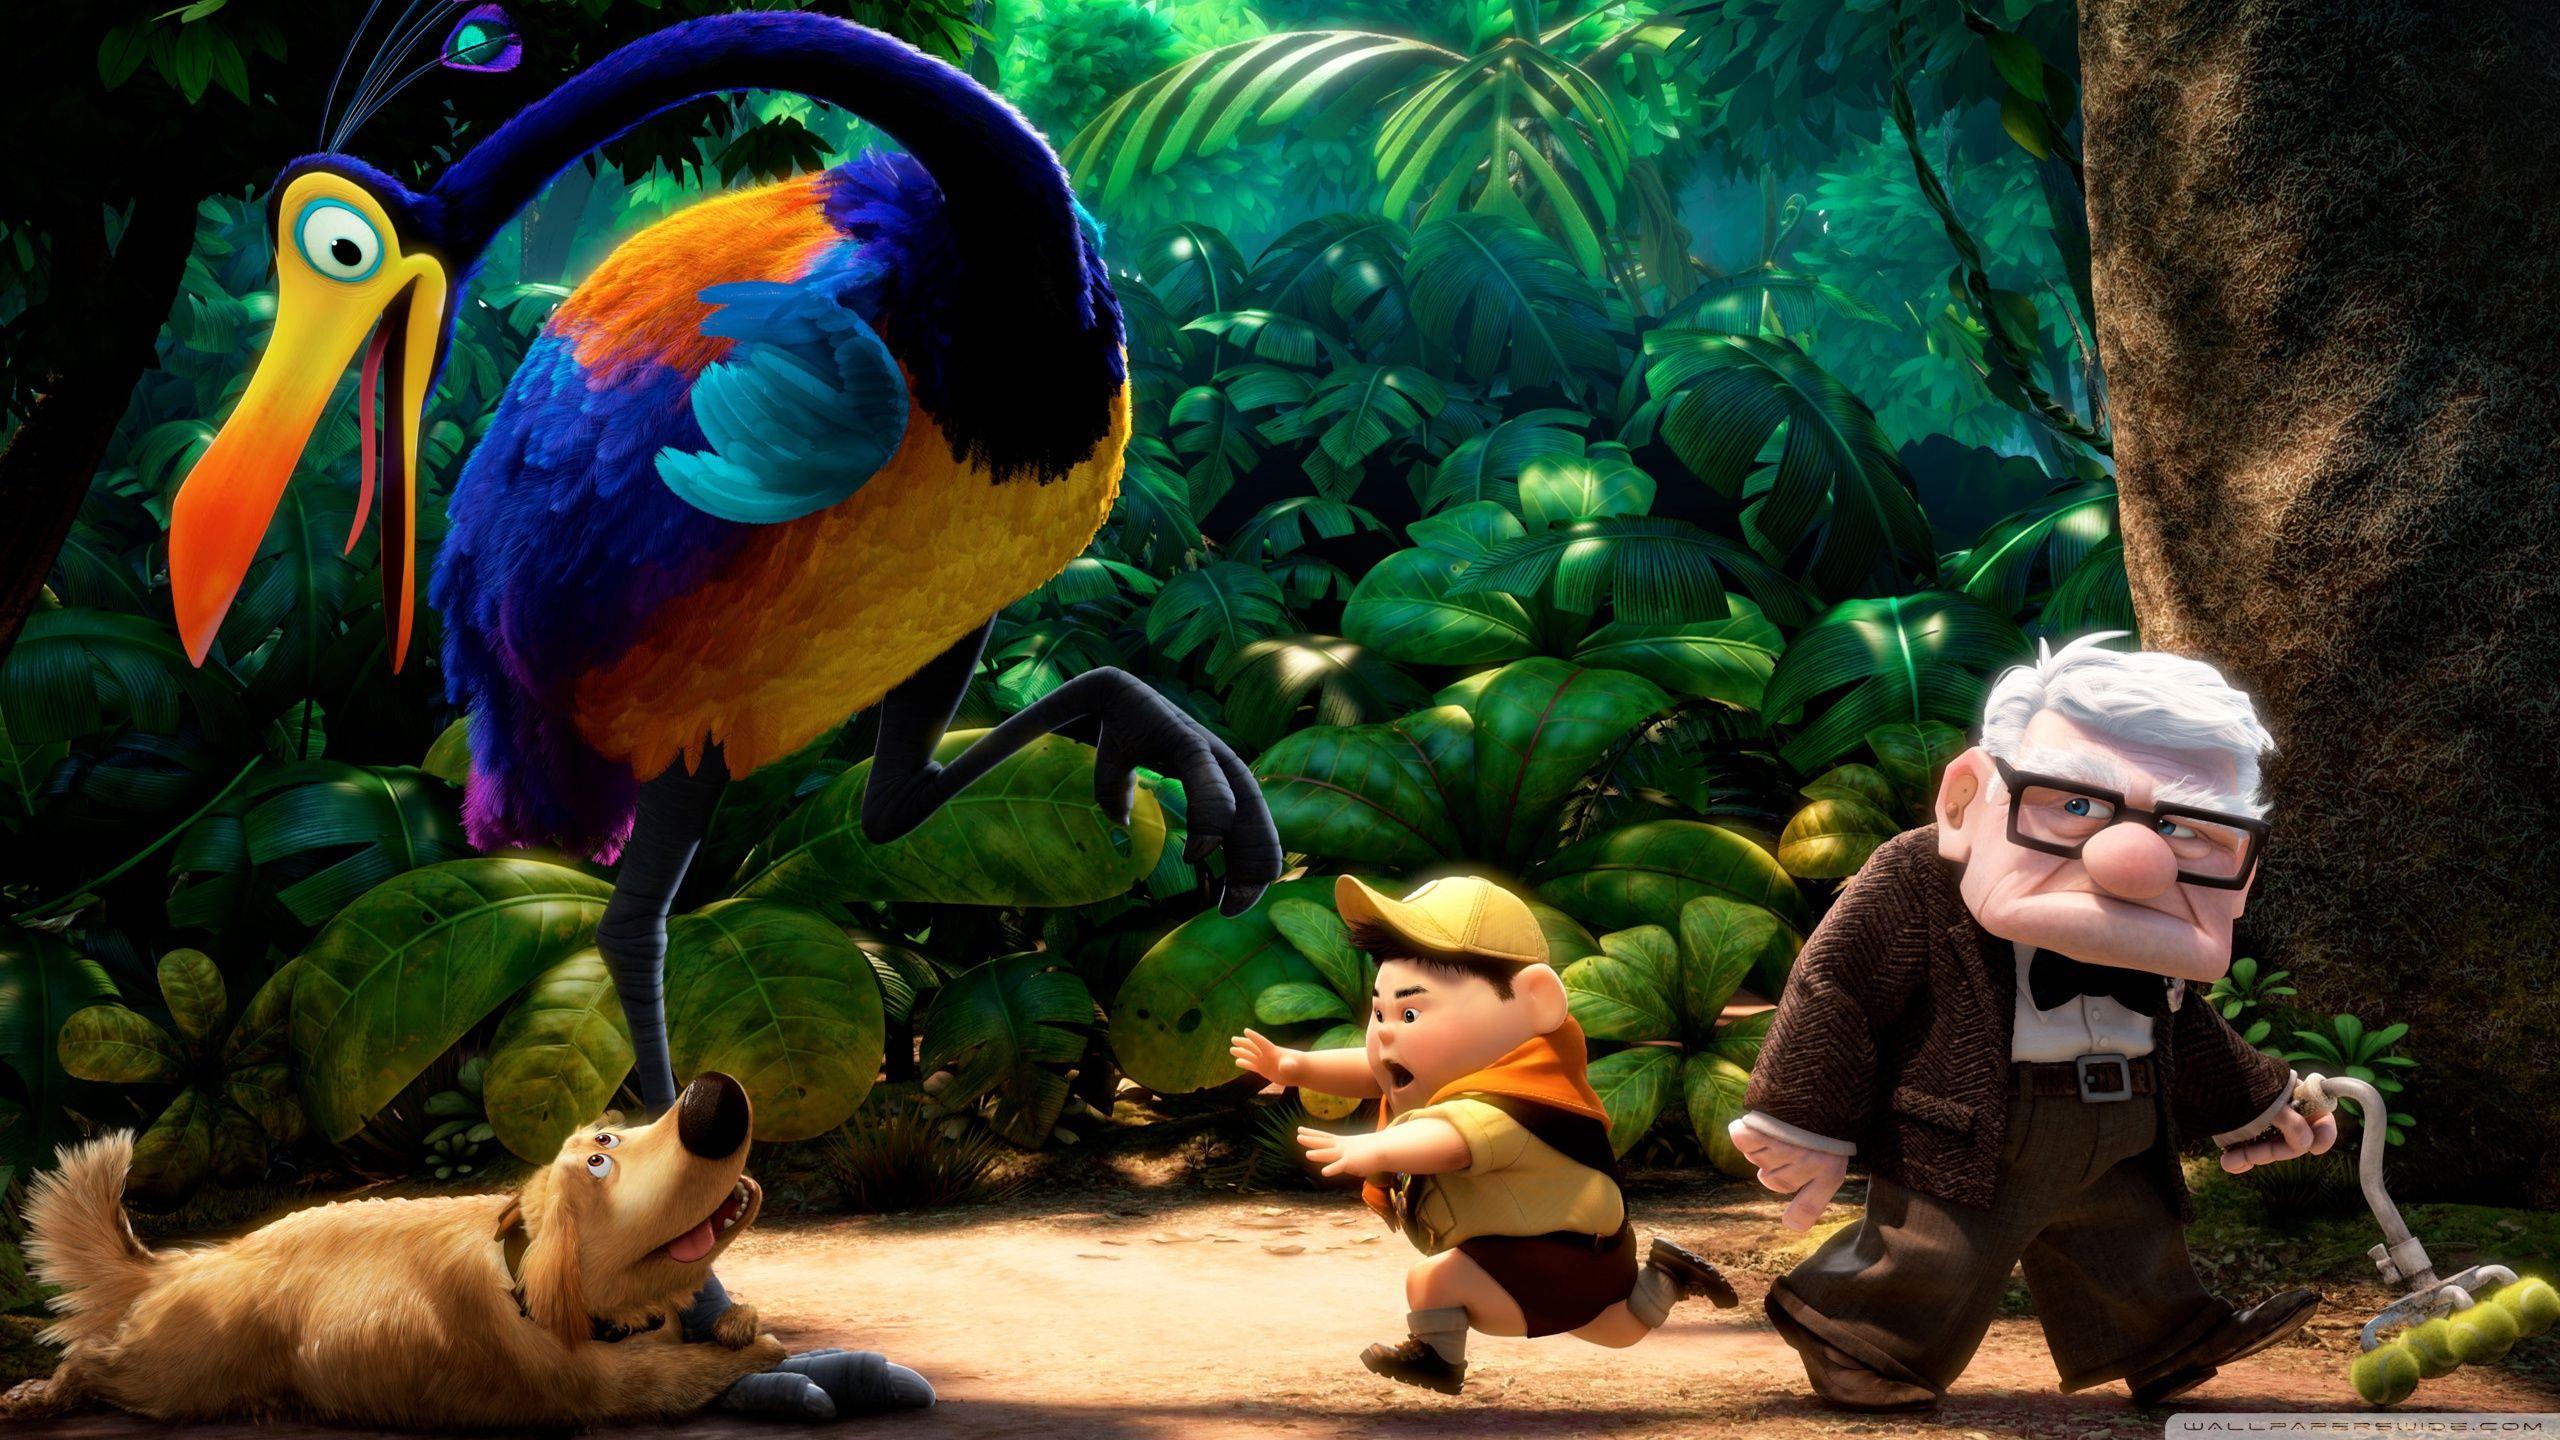 Pixars UP ❤ 4K HD Desktop Wallpaper for 4K Ultra HD TV • Wide